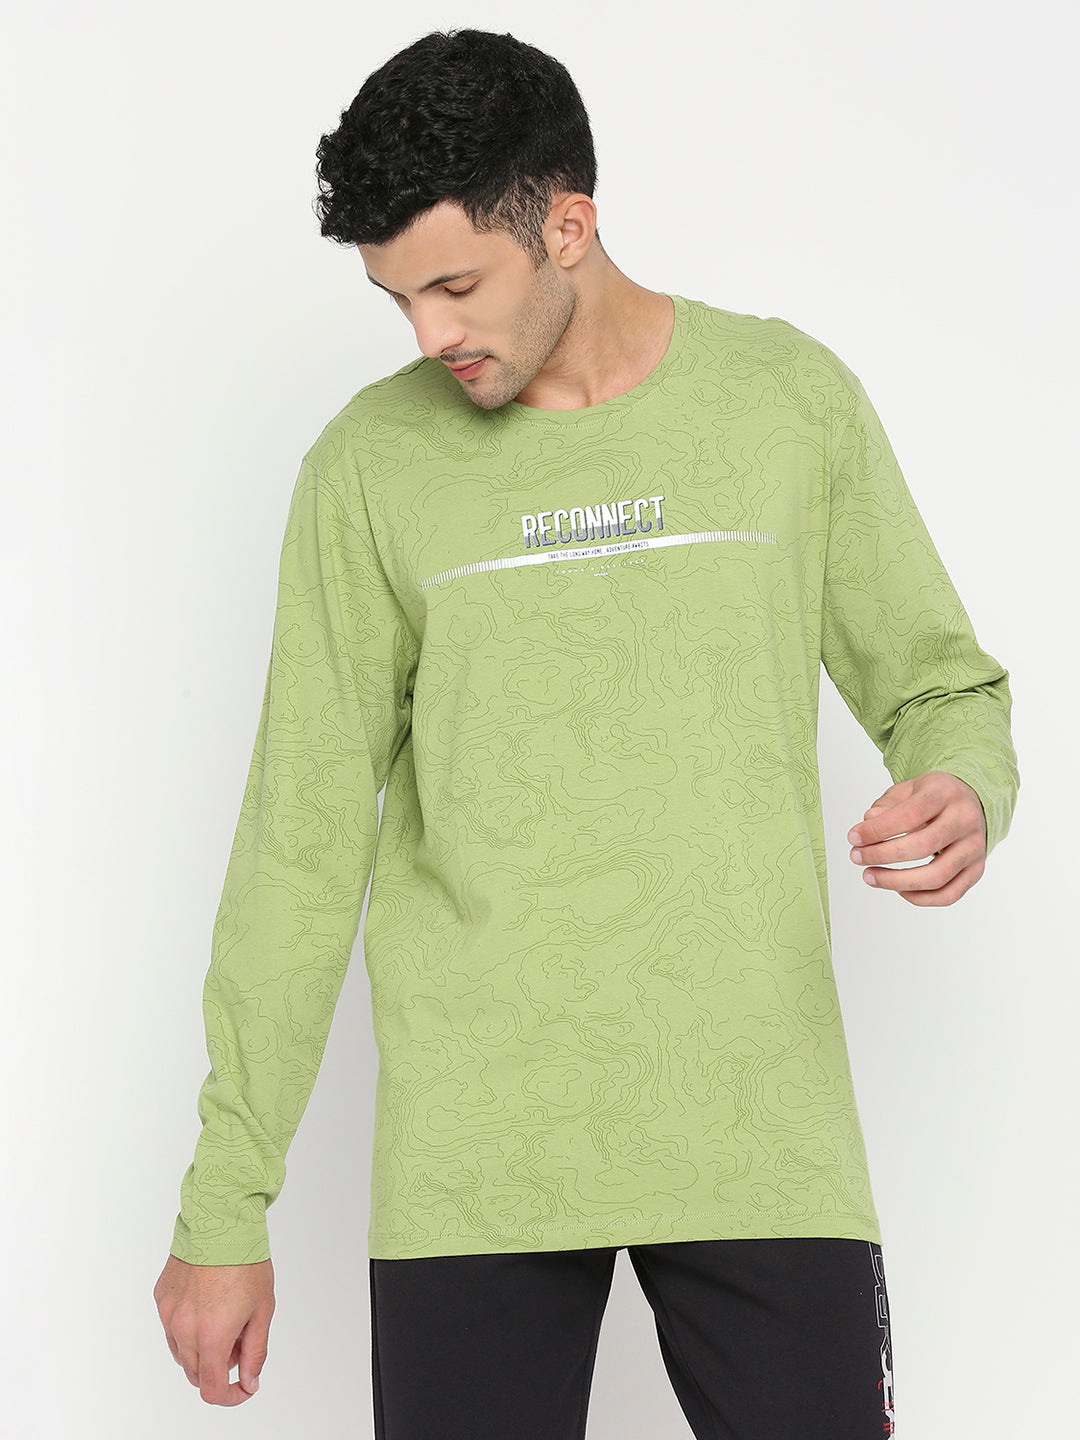 Spykar Dusty Green Cotton Blend Full Sleeve Printed Casual T-shirt For Men